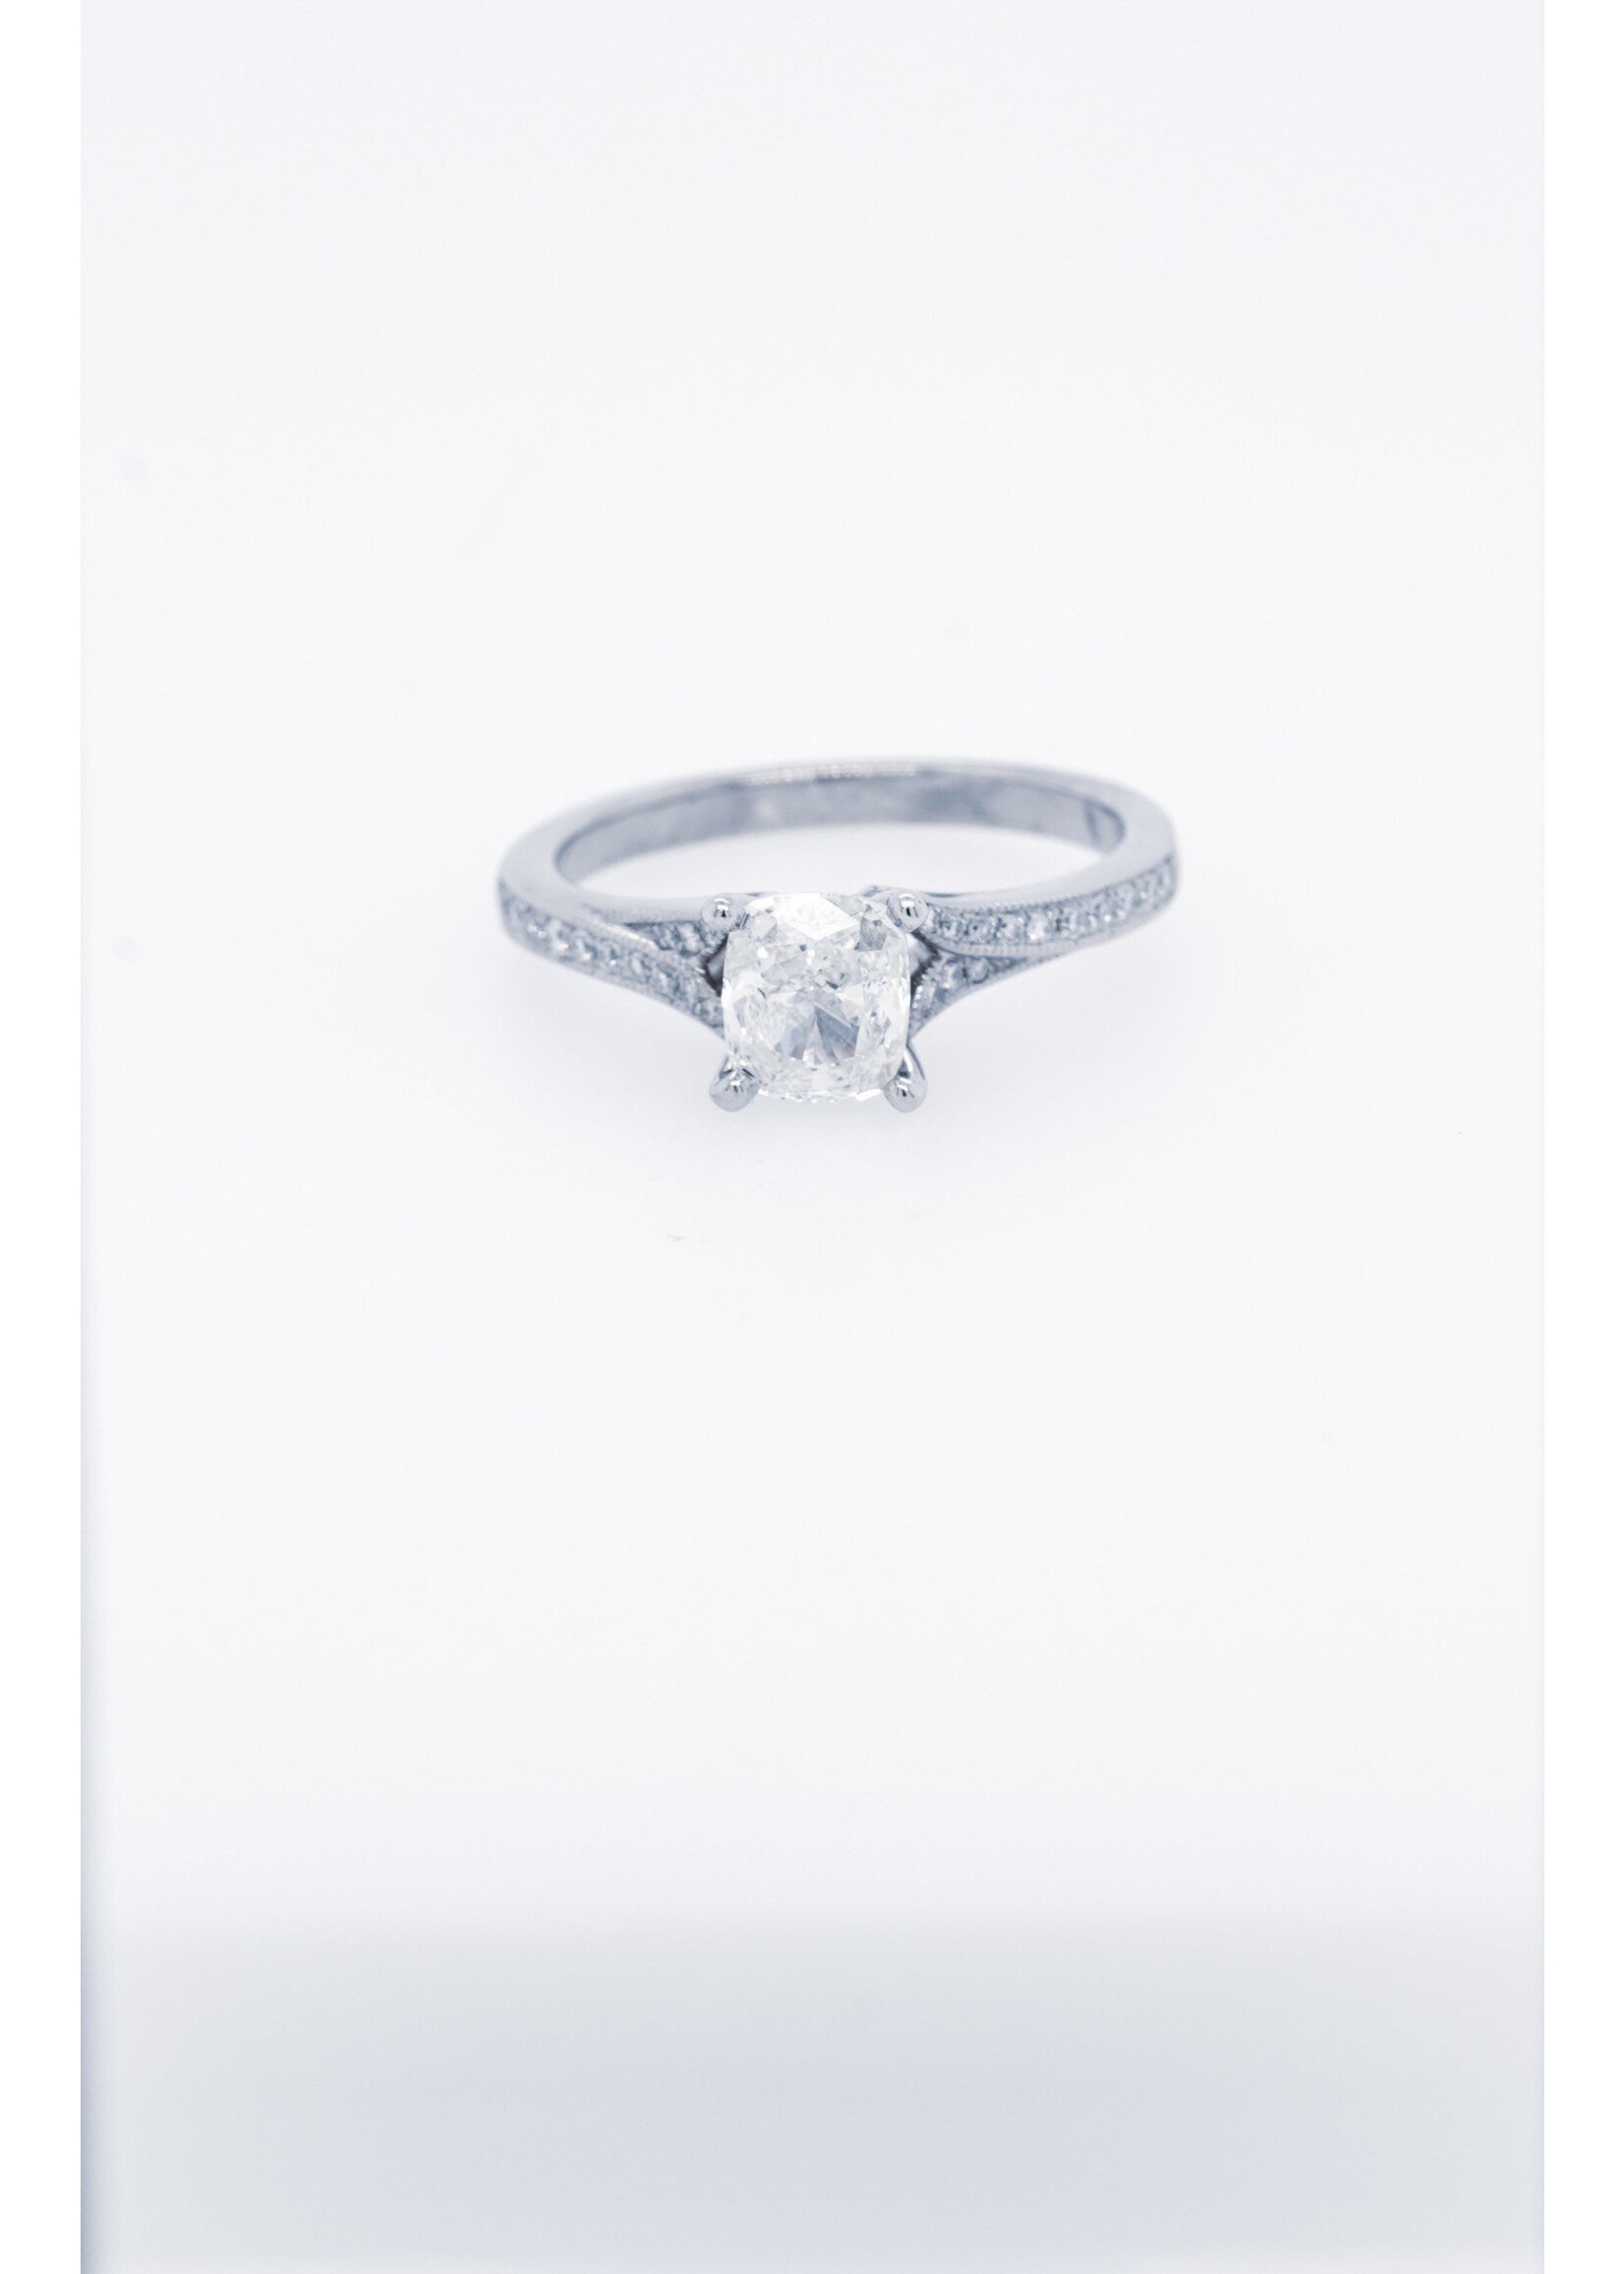 14KW 3.3g 1.16ctw (1.00ctr) I/SI2 Elongated Cushion Diamond Venetti Engagement Ring (size 6.75)